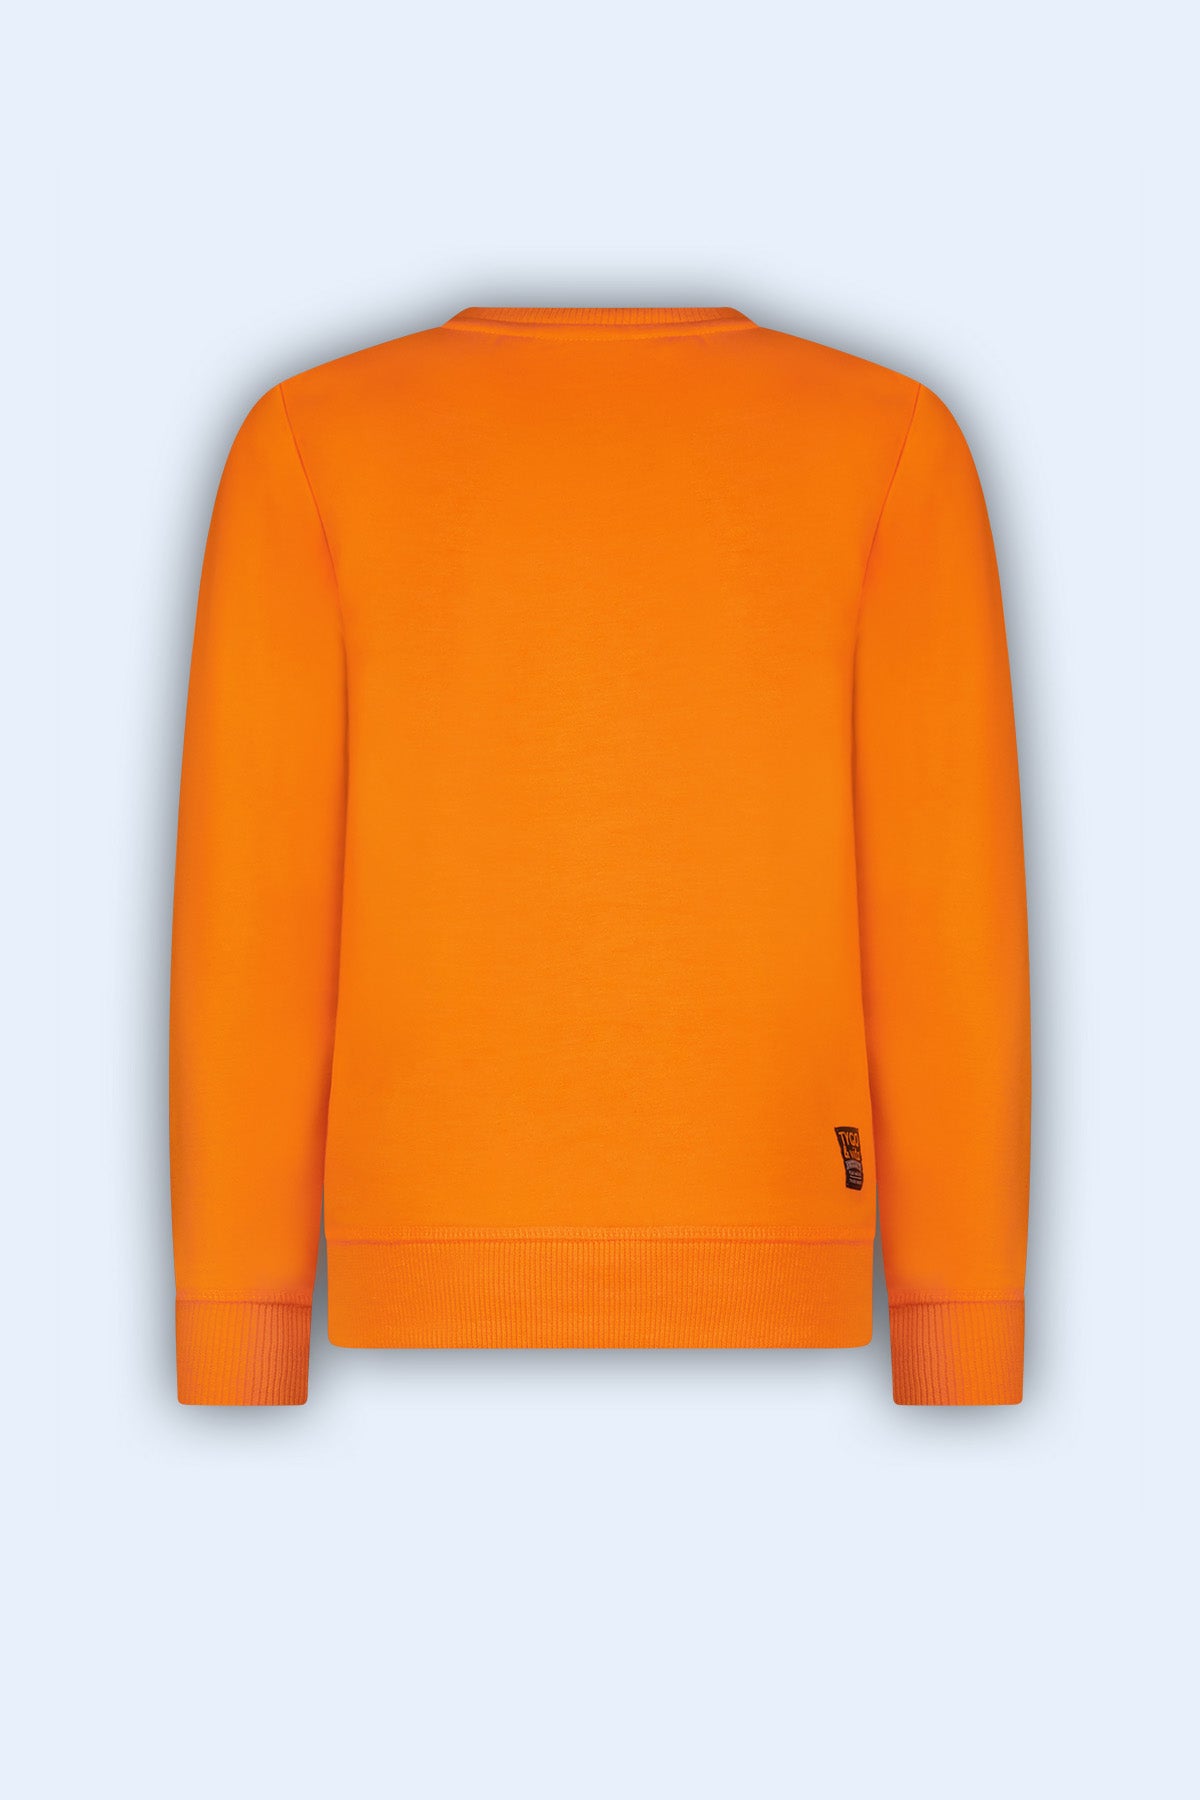 Sweater Tygo orange clownfish